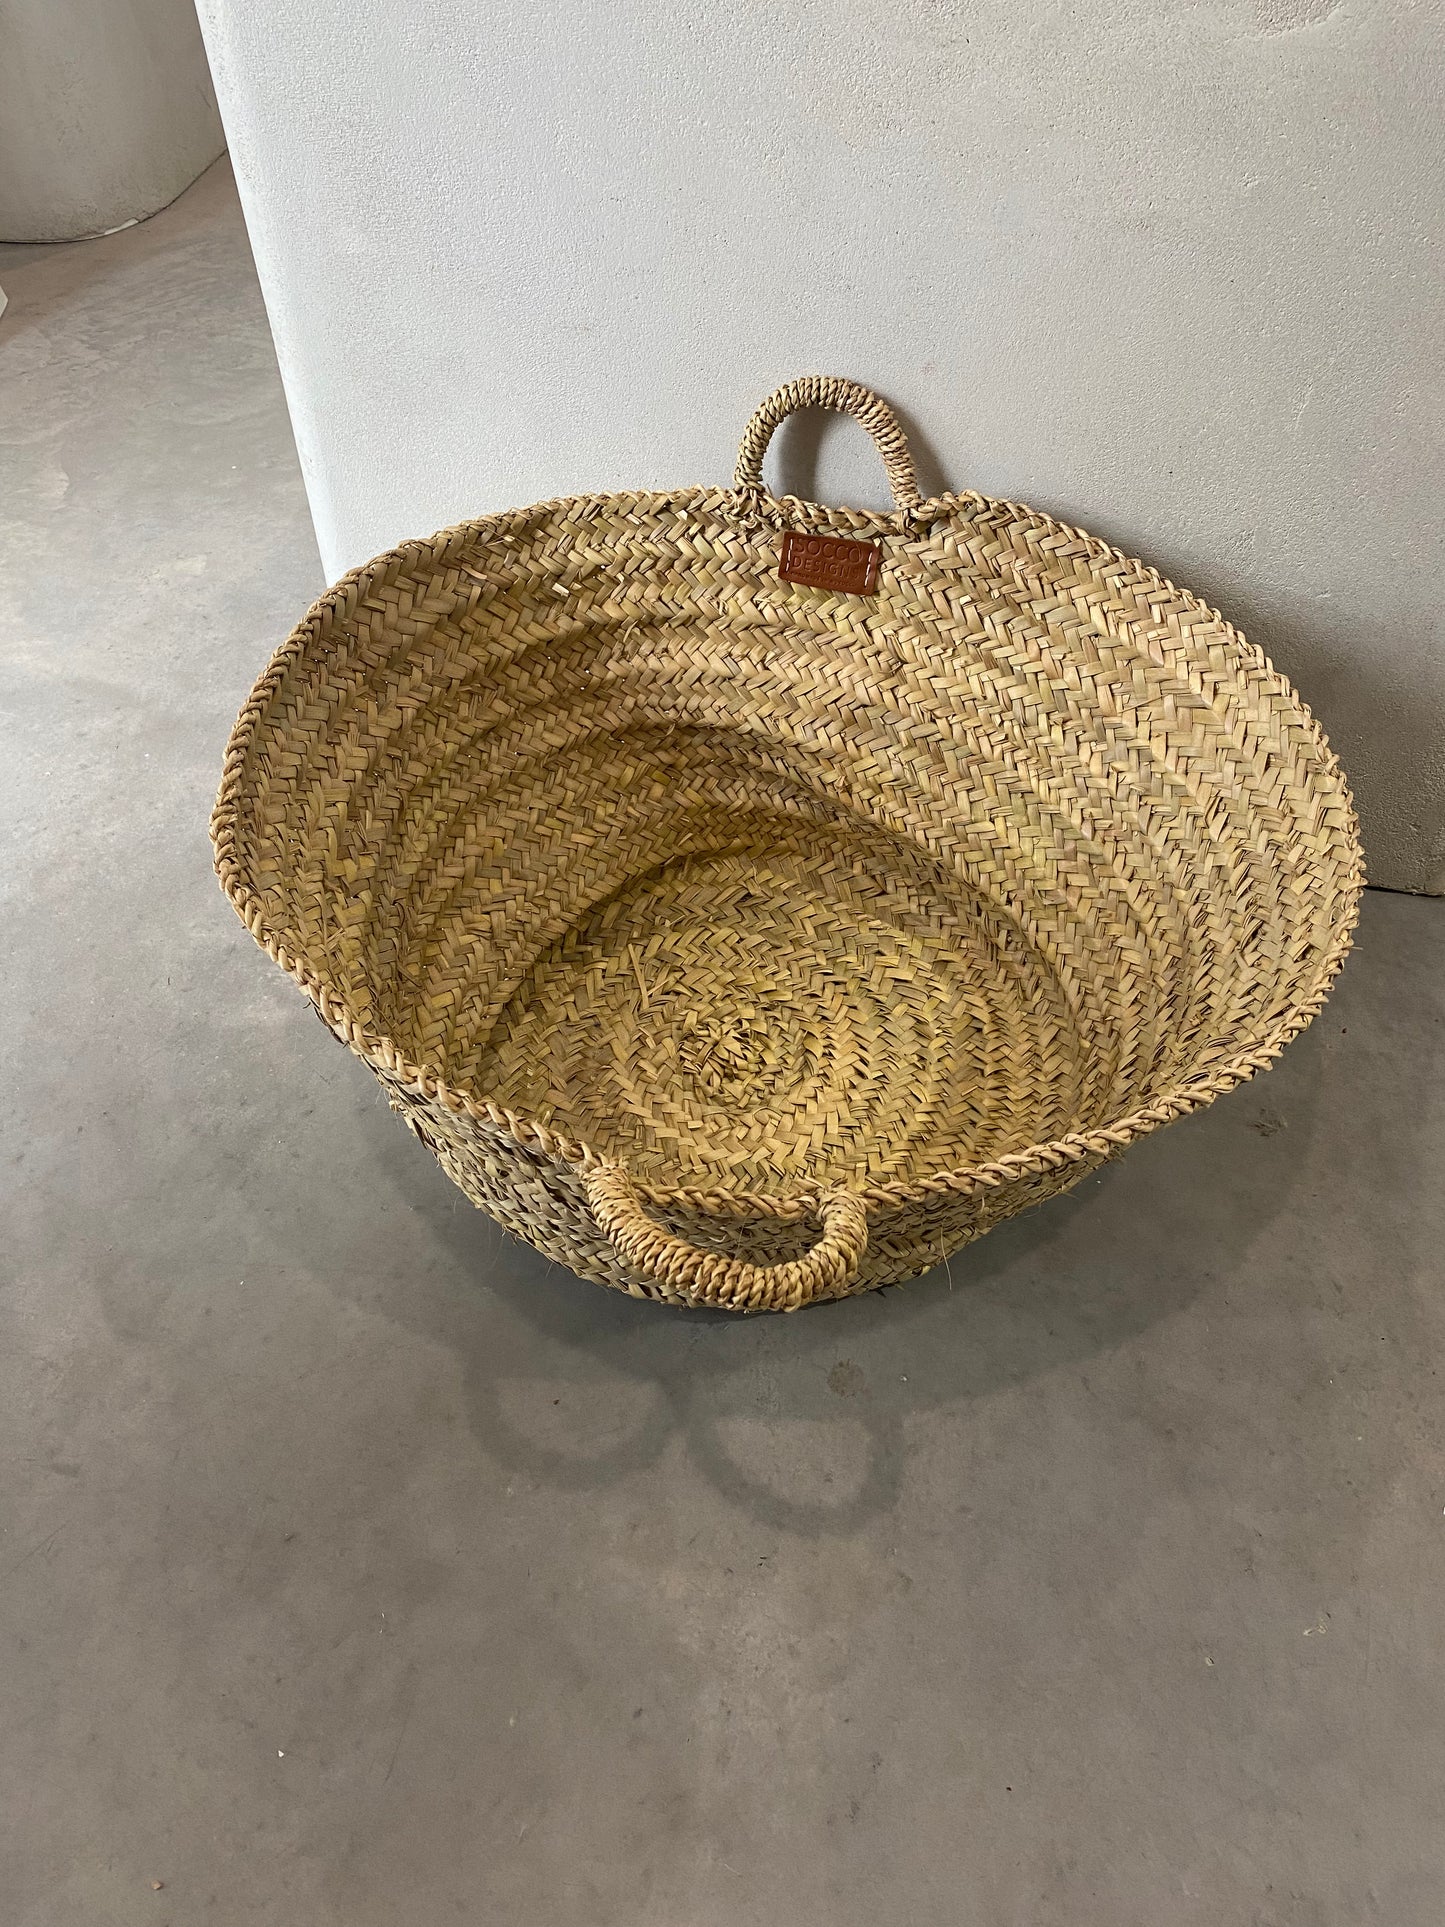 Market Basket - Medium